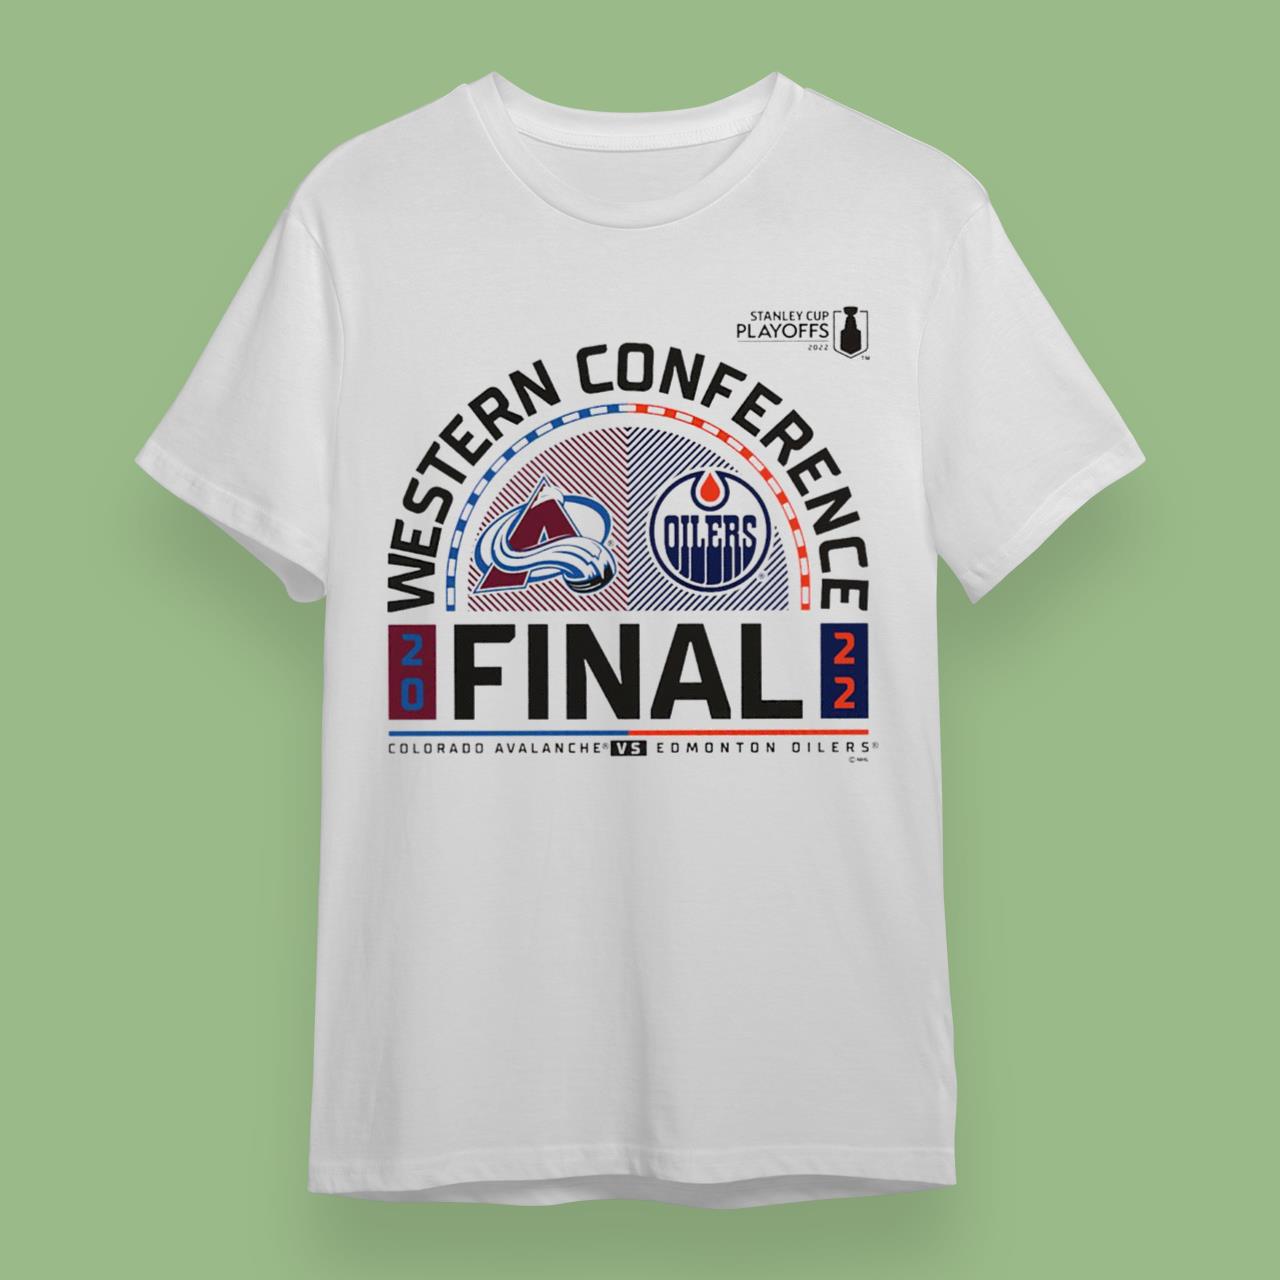 Colorado Avalanche vs Edmonton Oilers 2022 Stanley Cup Playoffs Shirt